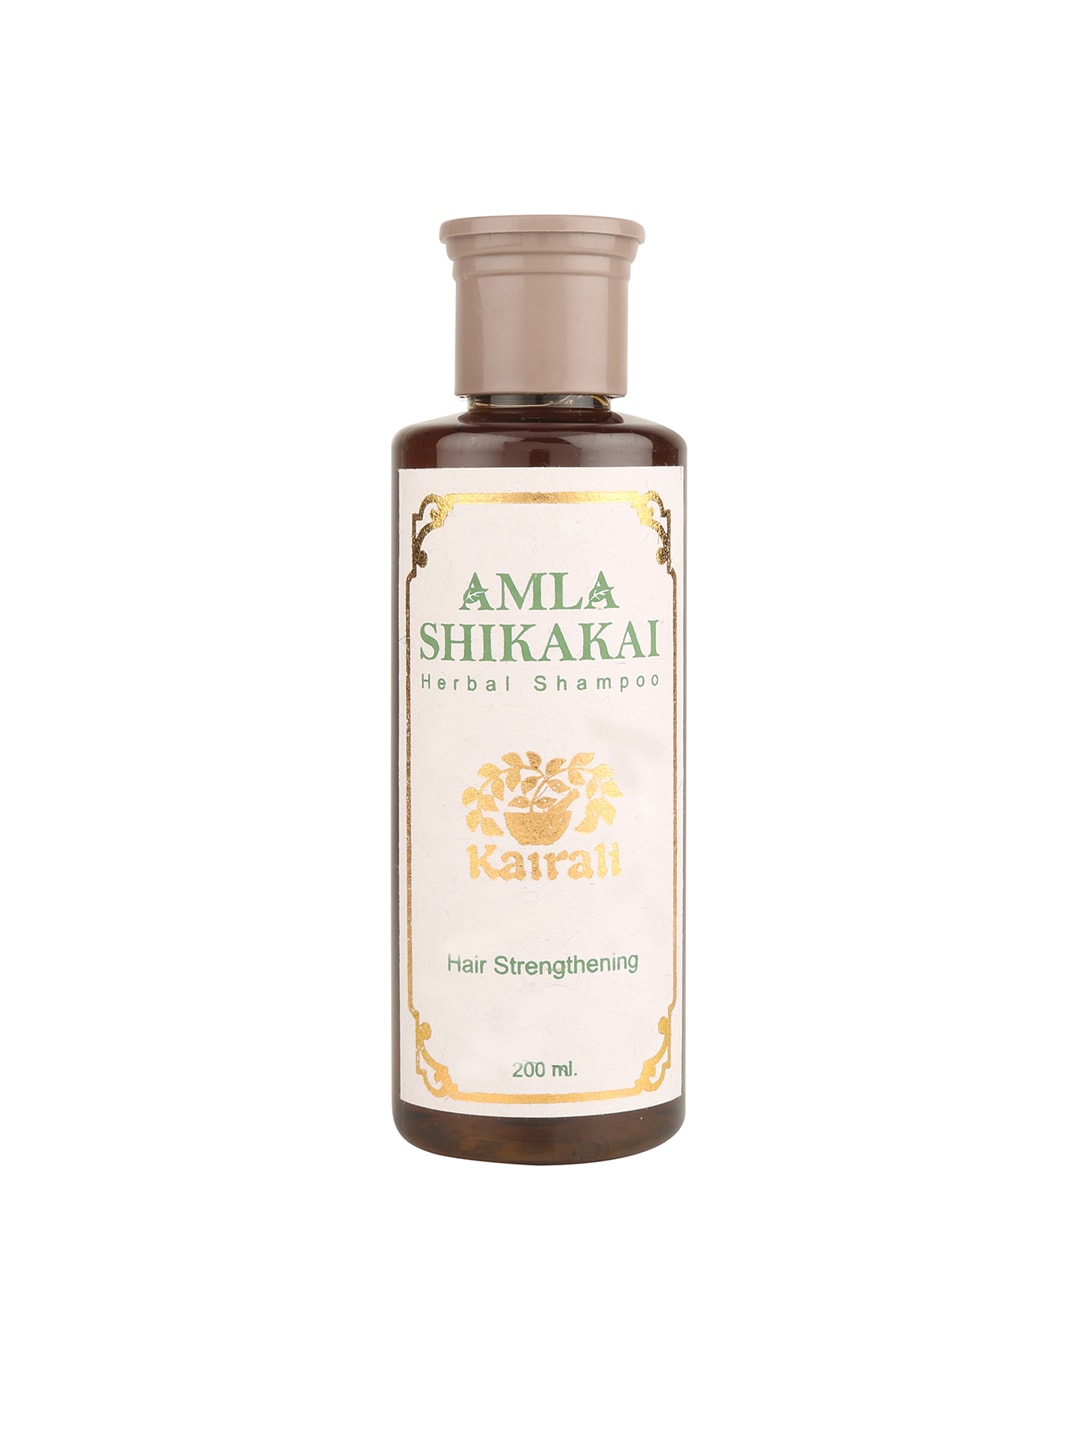 Kairali Amla Shikakai Herbal Shampoo 200ml Price in India